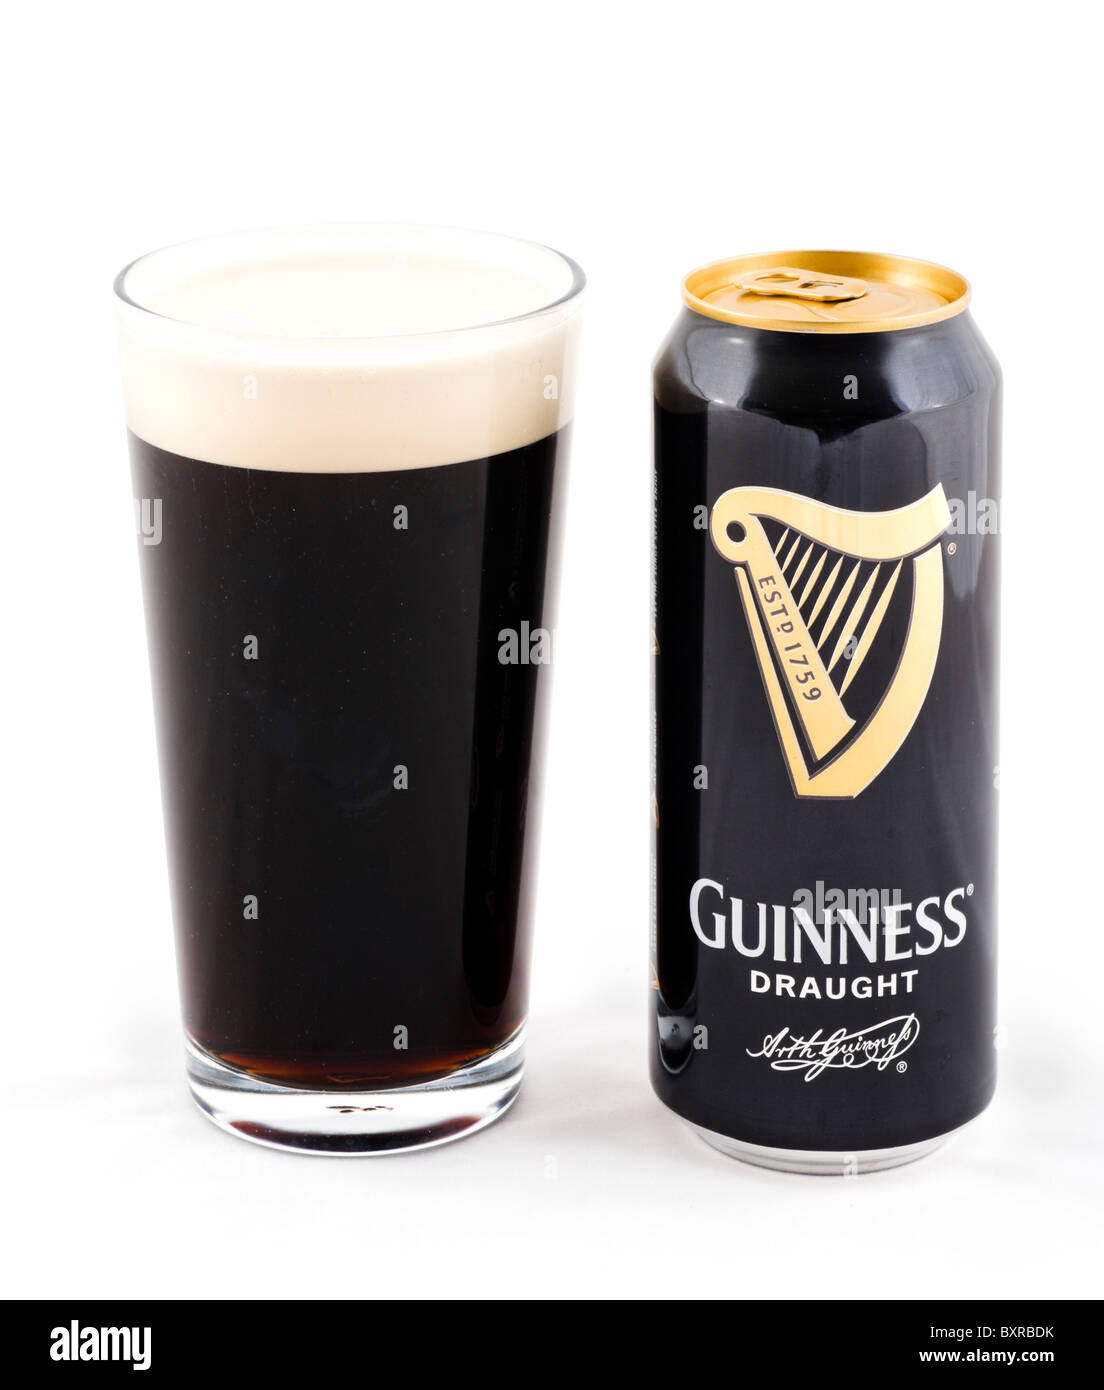 Dose und Glas Draught Guinness, UK Stockfoto